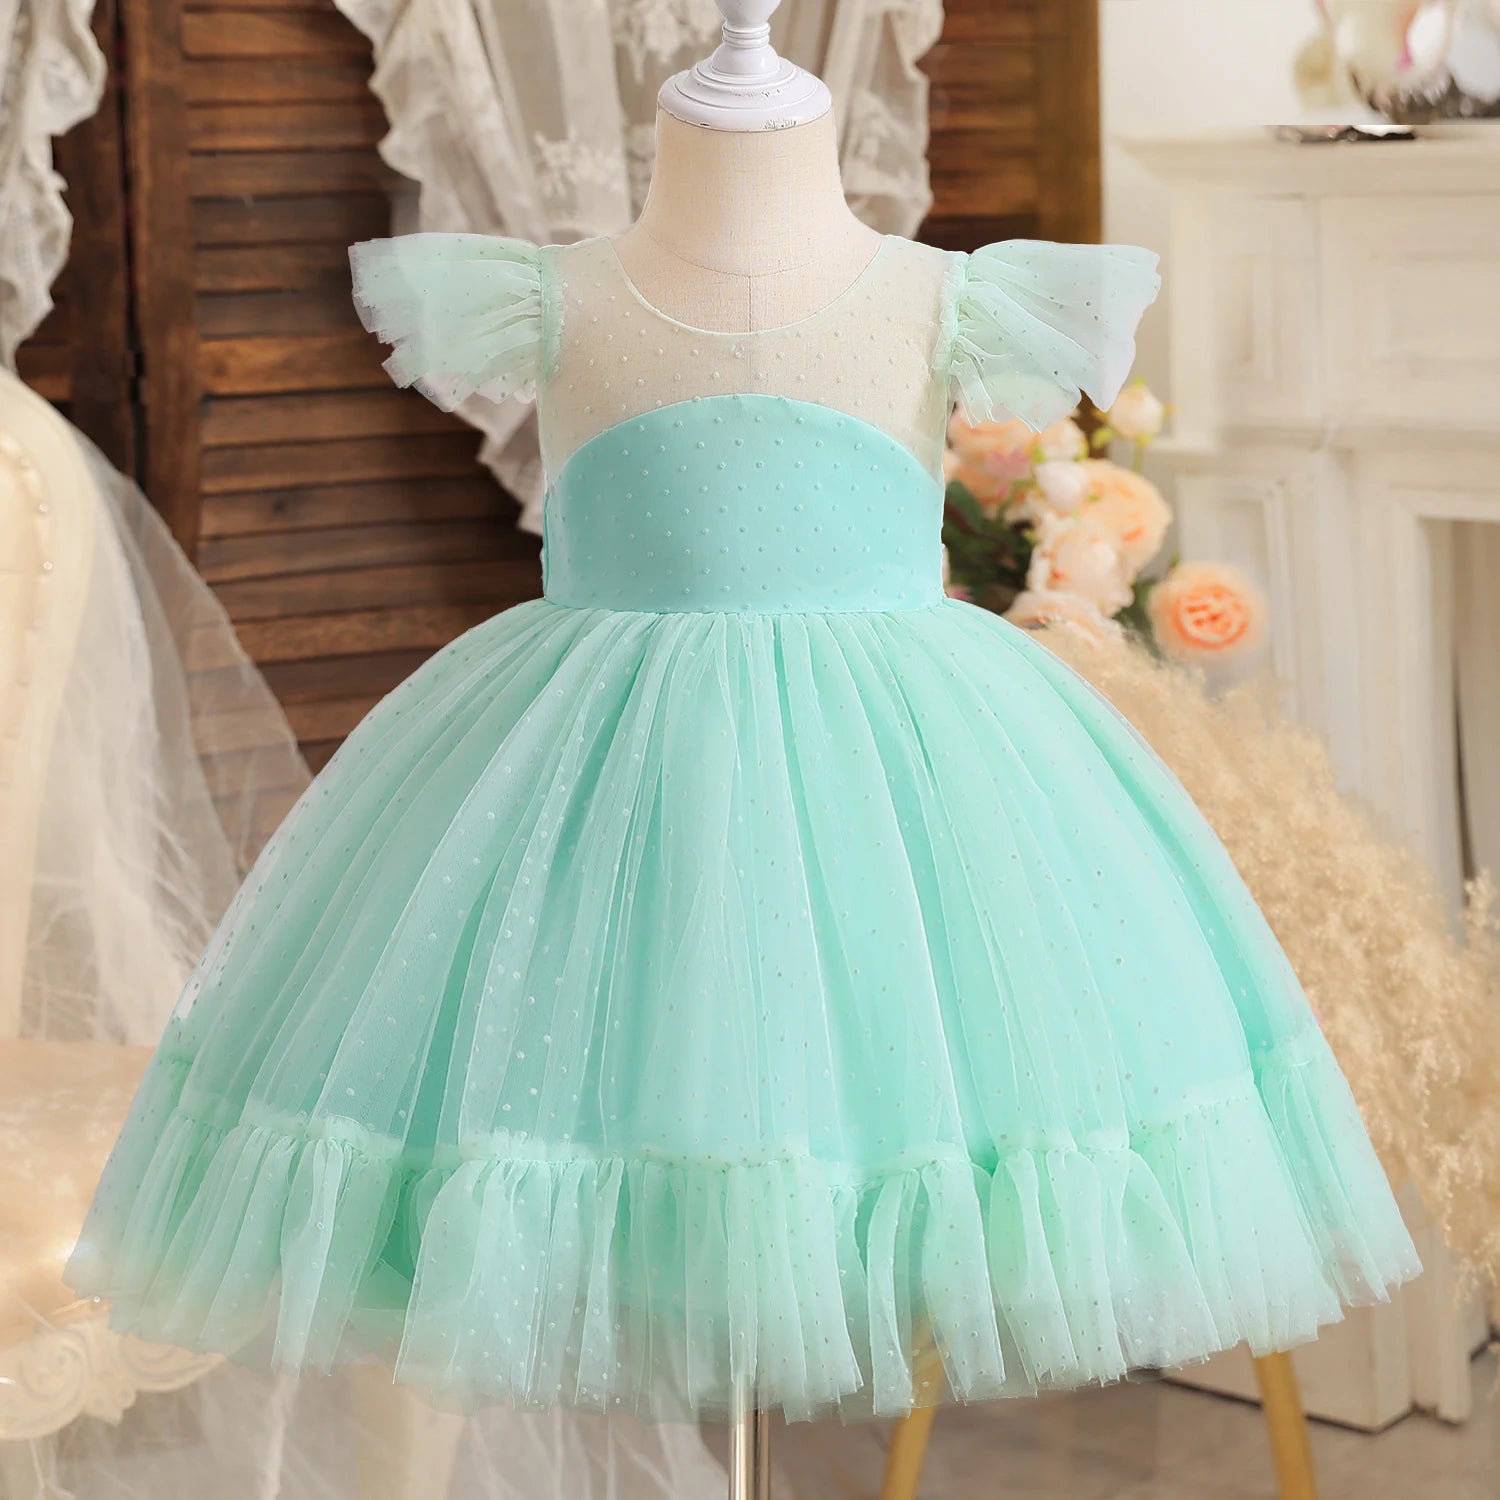 Elegant Dress for Evening Party Princess Gown Green by Baby Minaj Cruz